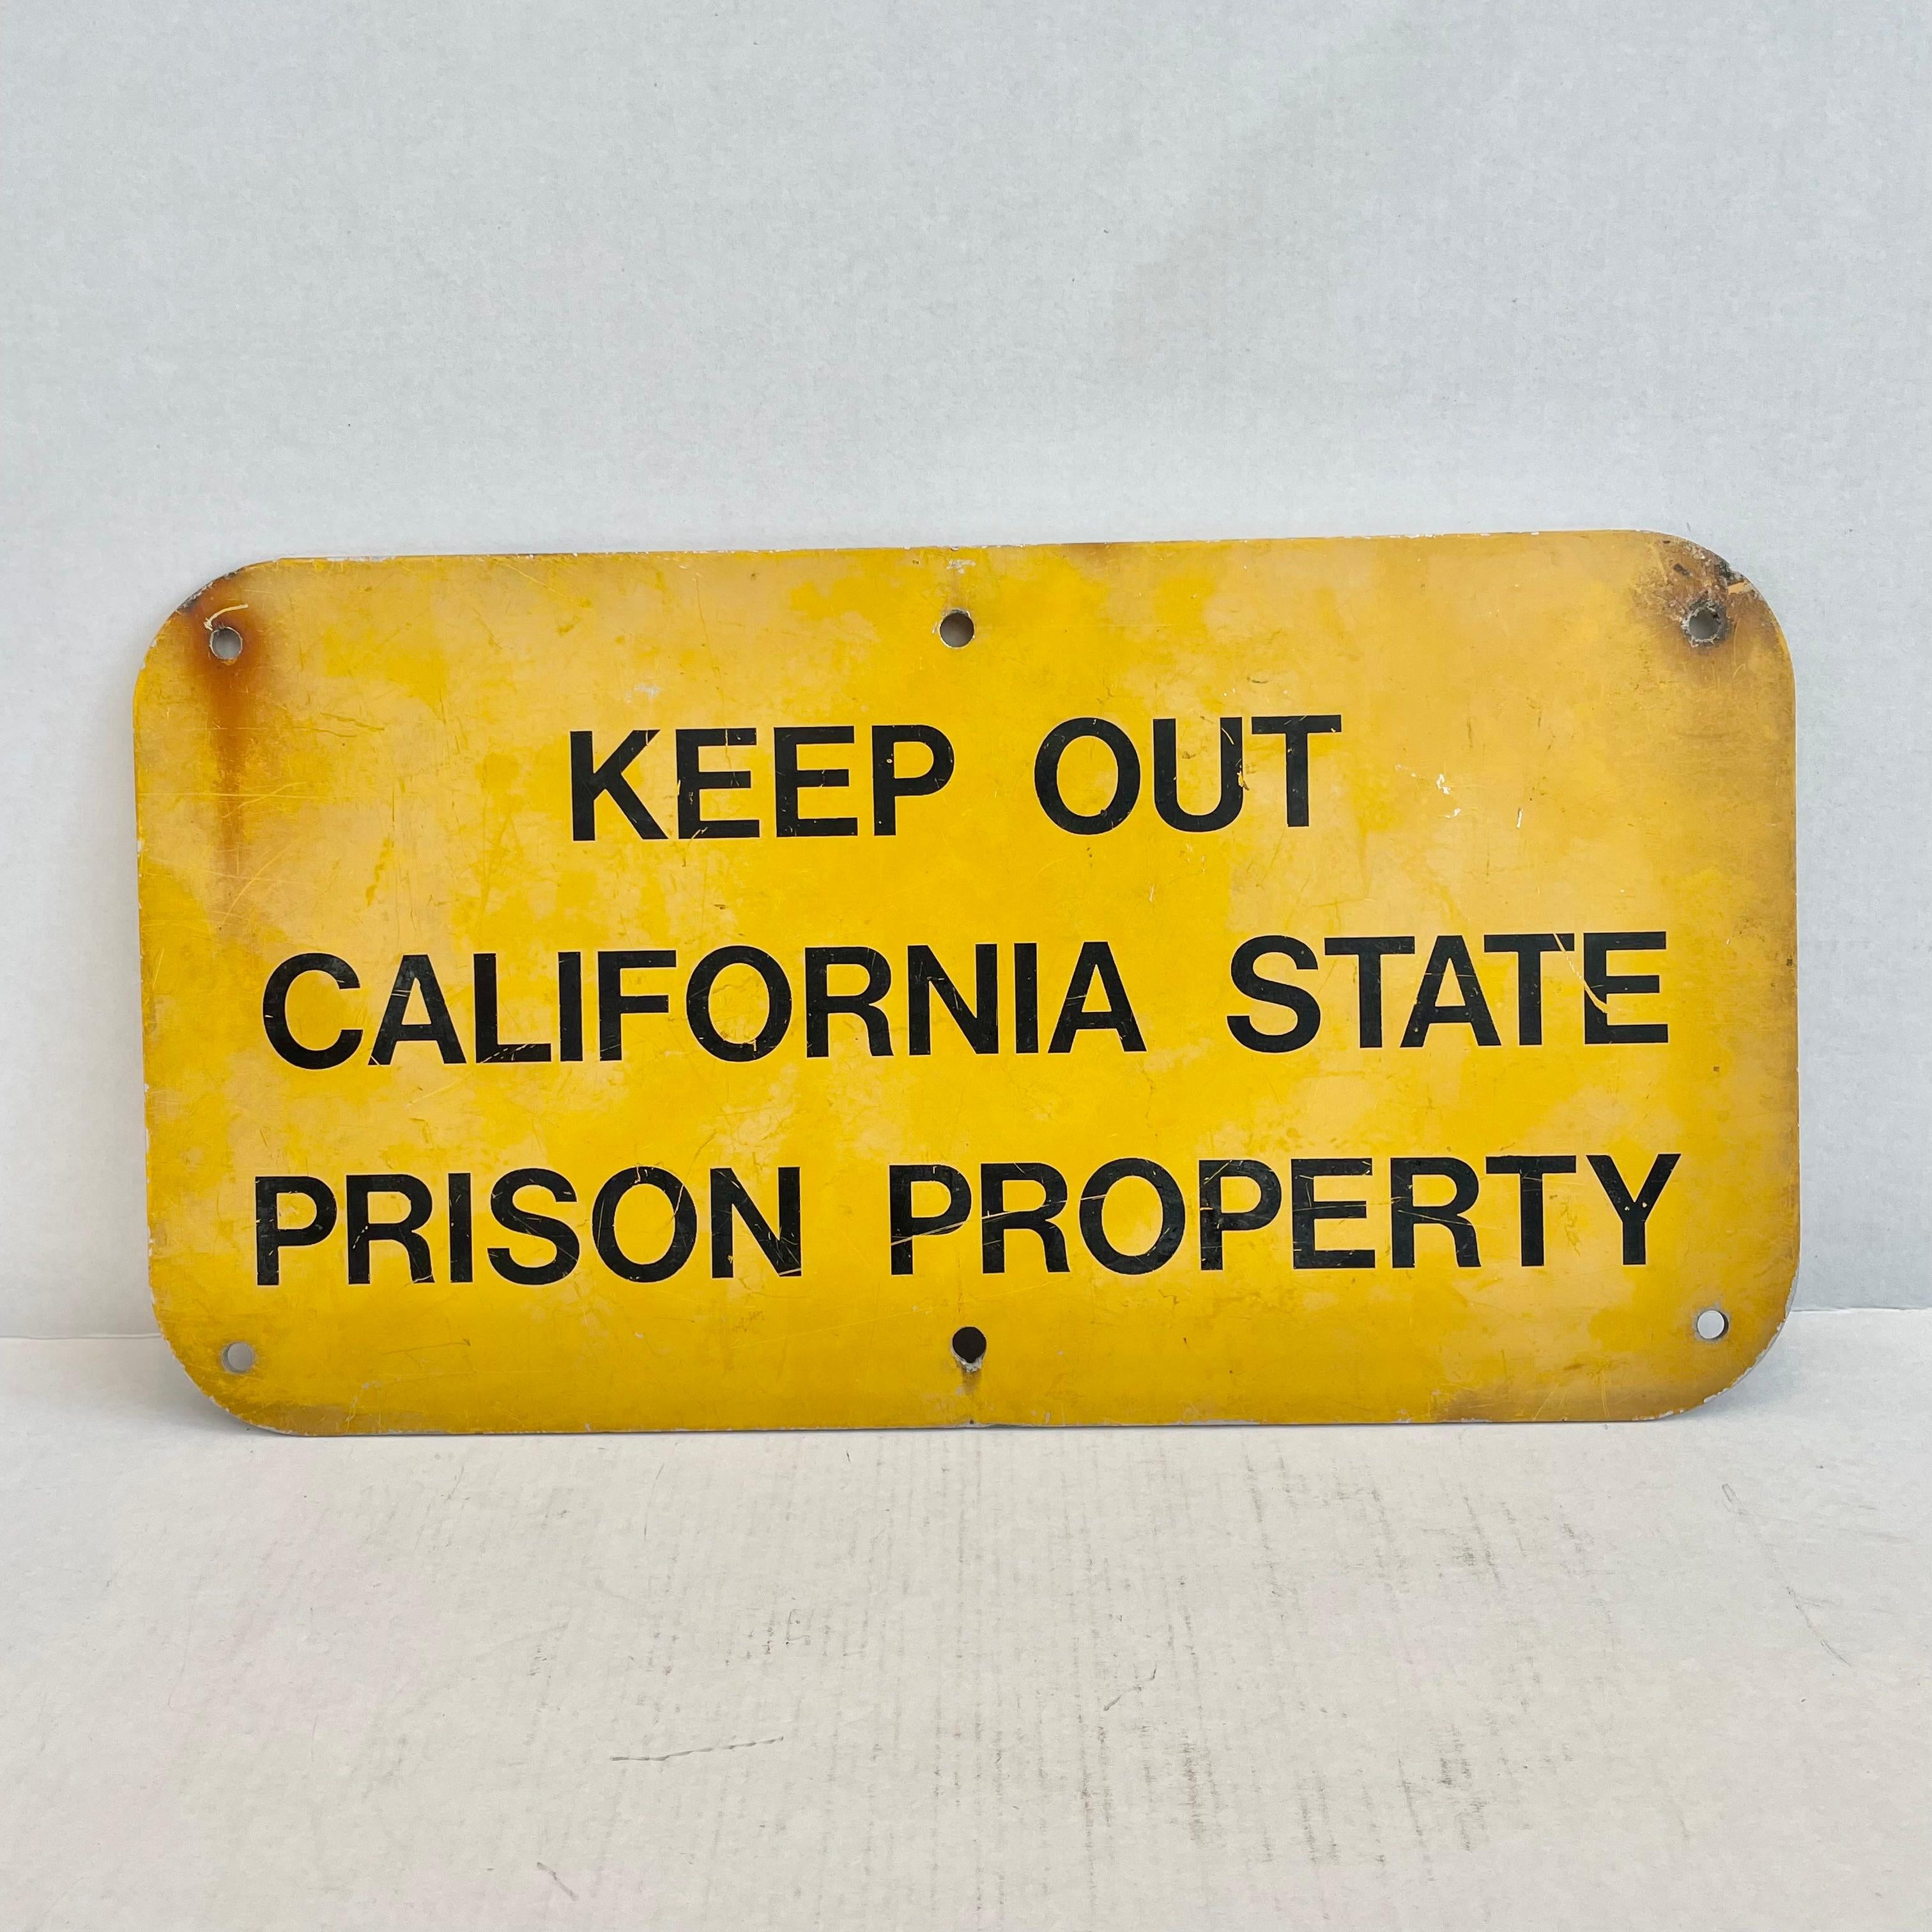 Unique California state prison sign that reads 